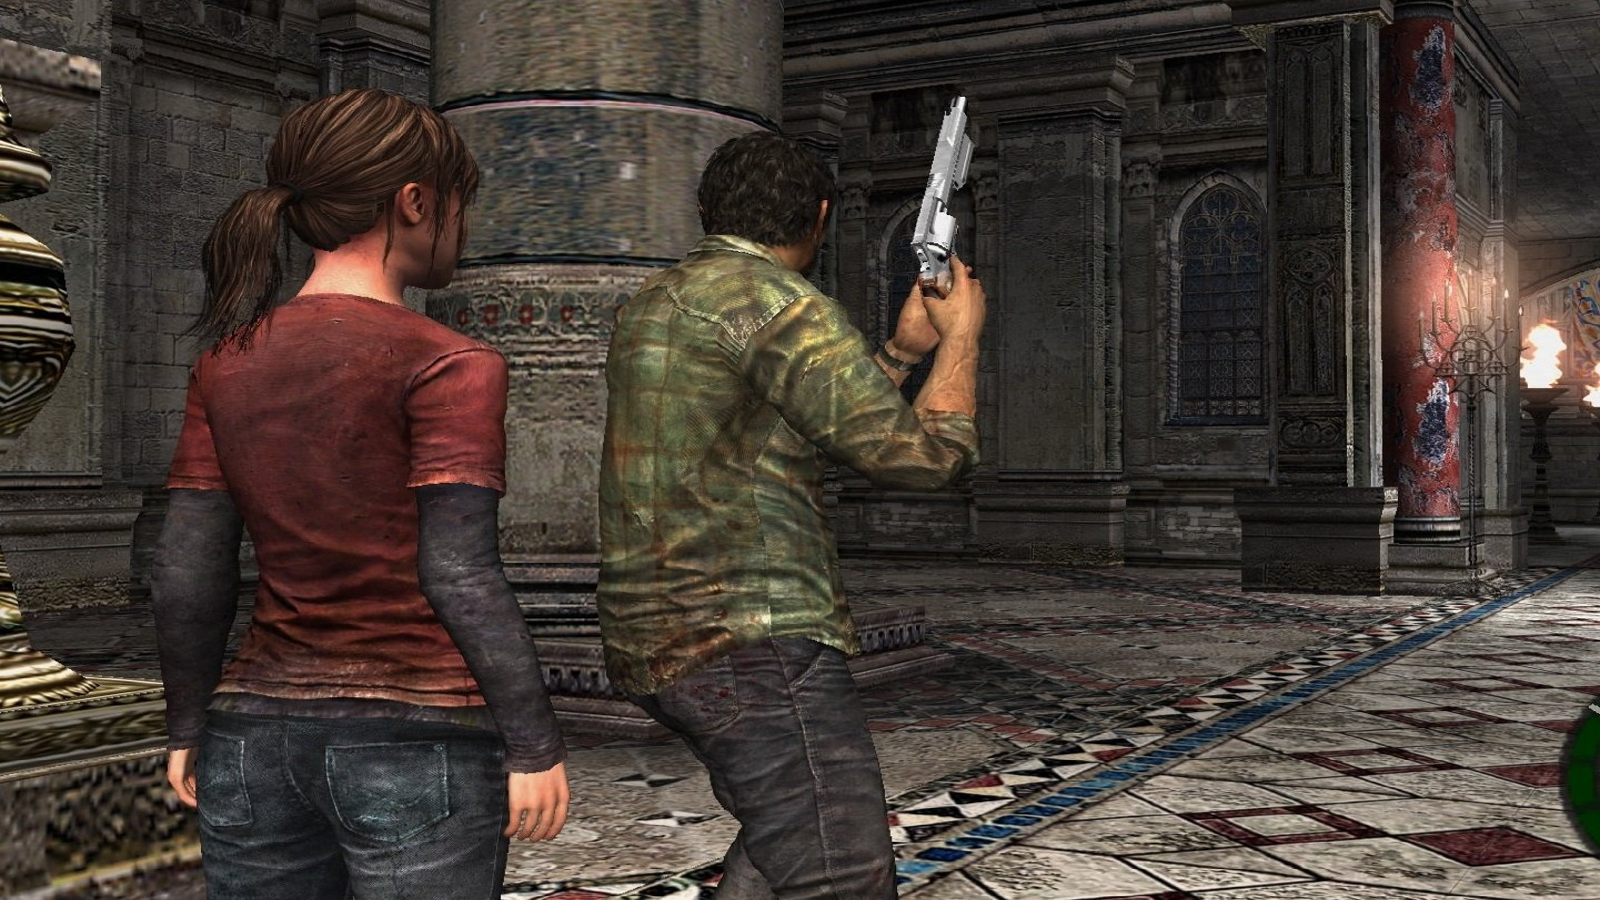 Saiba tudo sobre The Last Of Us Part II, que será protagonizado por Ellie